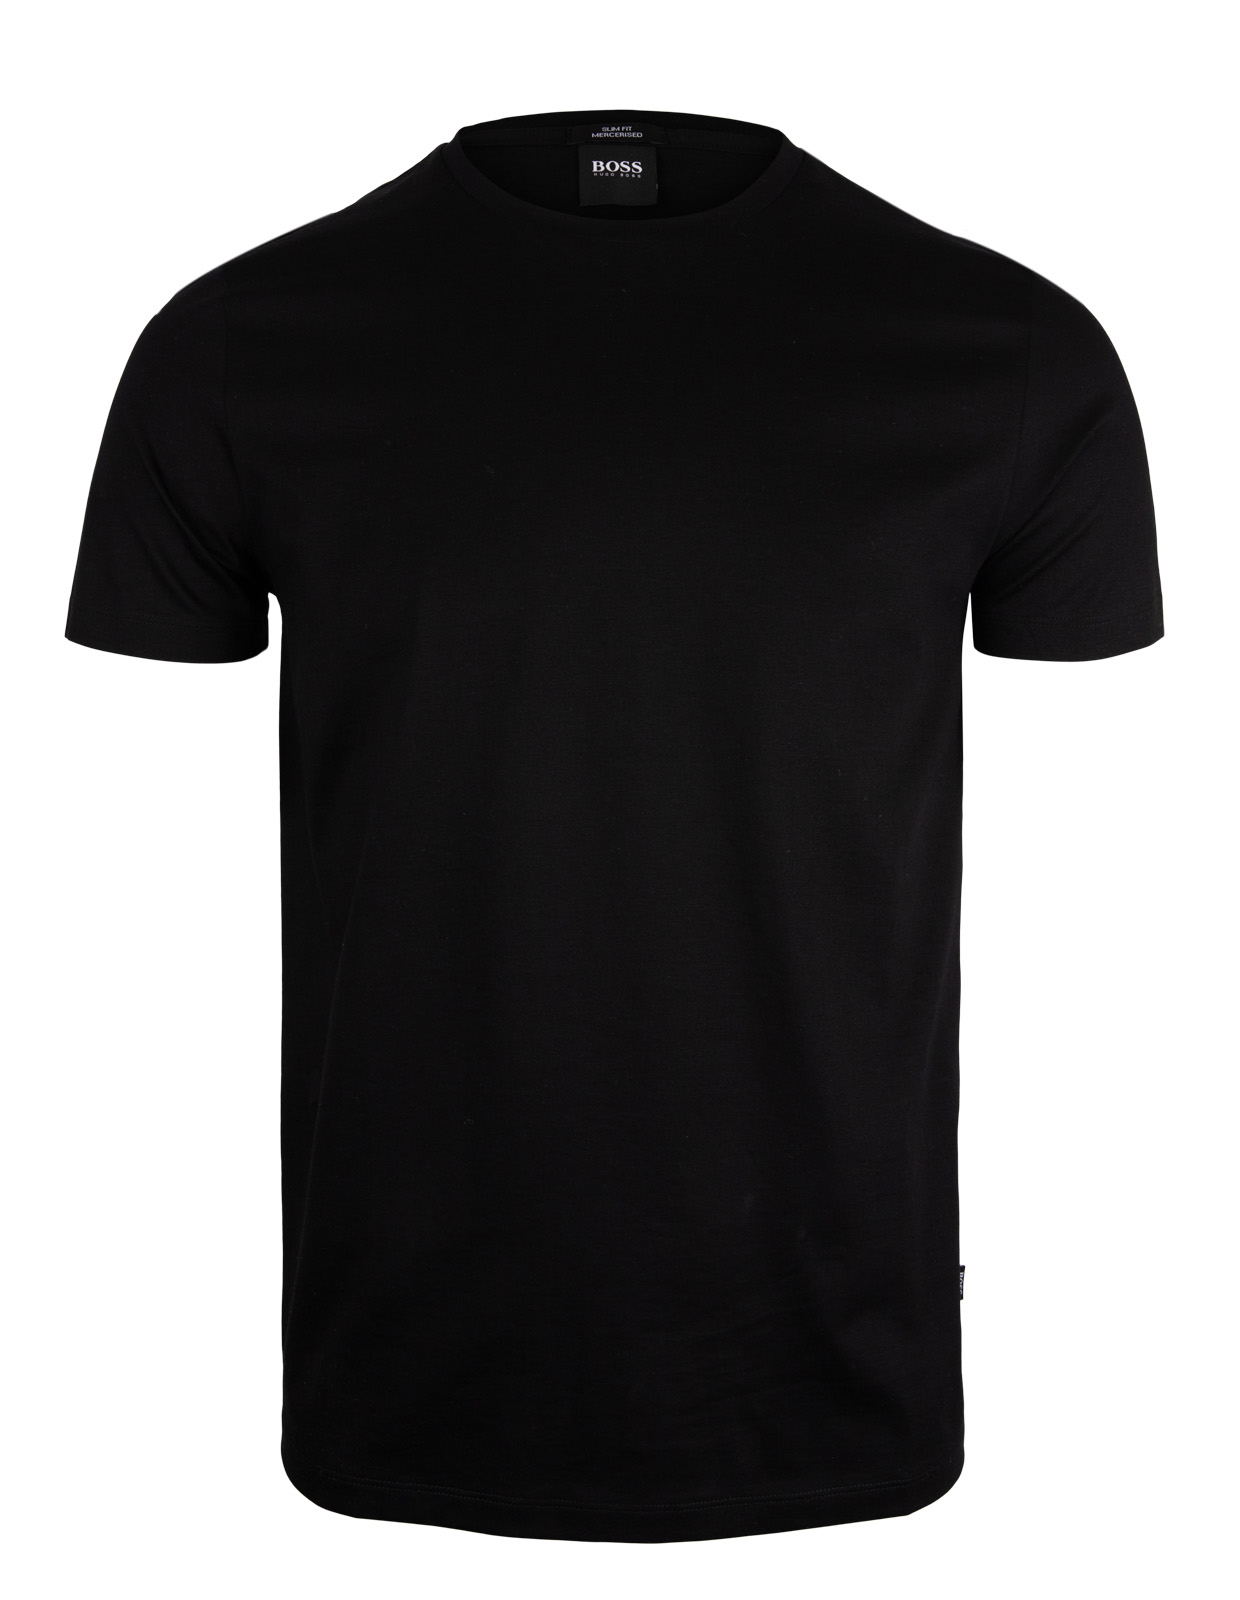 Tessler T-shirt Cotton Black